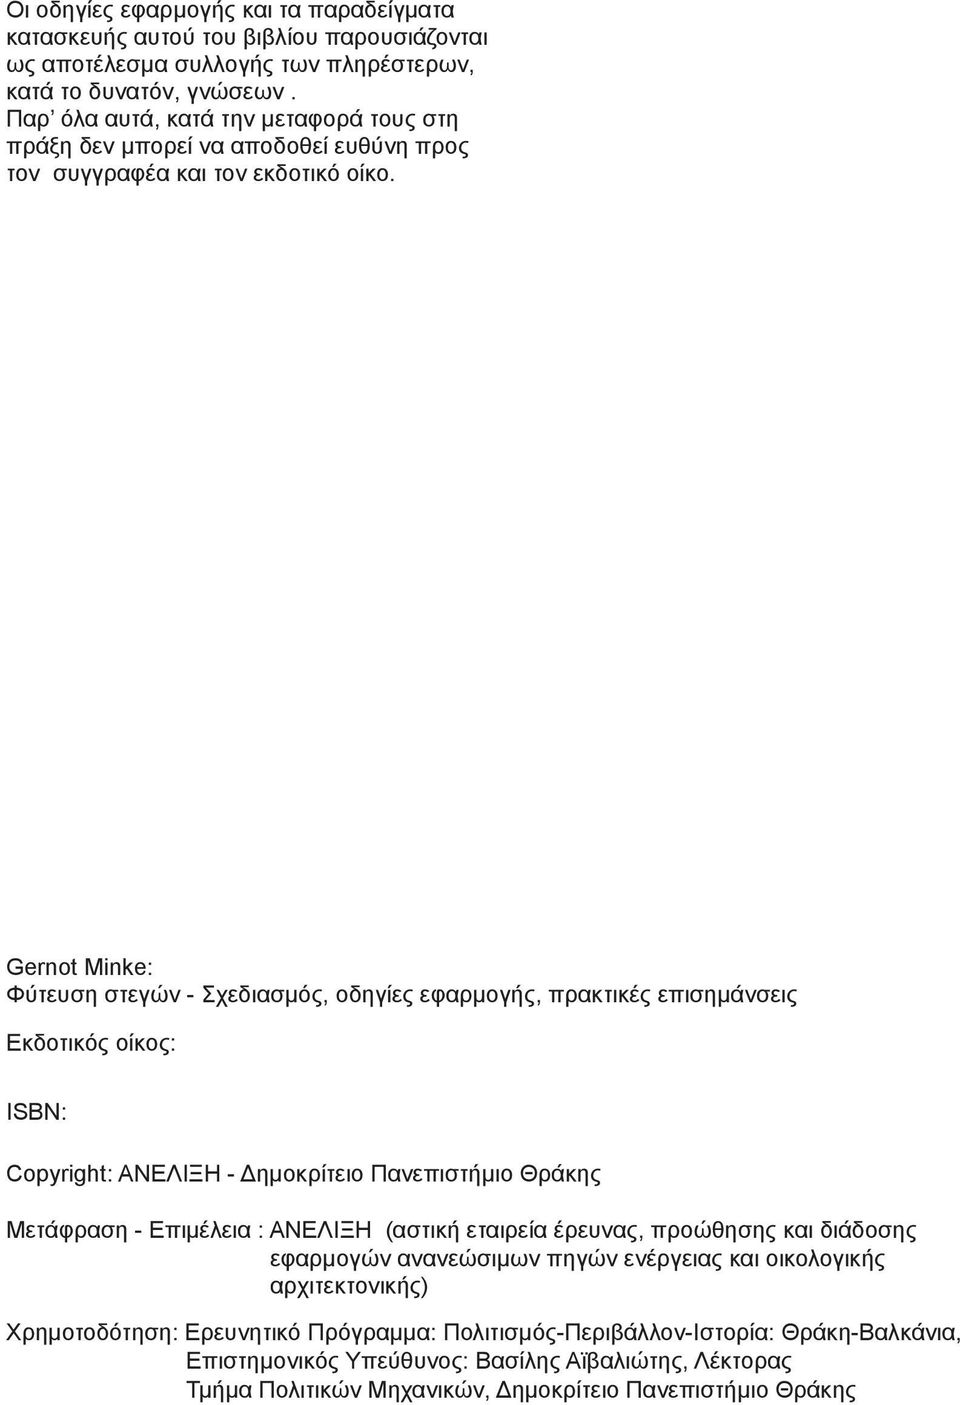 Gernot Minke: Φύτευση στεγών - Σχεδιασμός, οδηγίες εφαρμογής, πρακτικές επισημάνσεις Εκδοτικός οίκος: ISBN: Copyright: ΑΝΕΛΙΞΗ - Δημοκρίτειο Πανεπιστήμιο Θράκης Μετάφραση - Επιμέλεια : ΑΝΕΛΙΞΗ